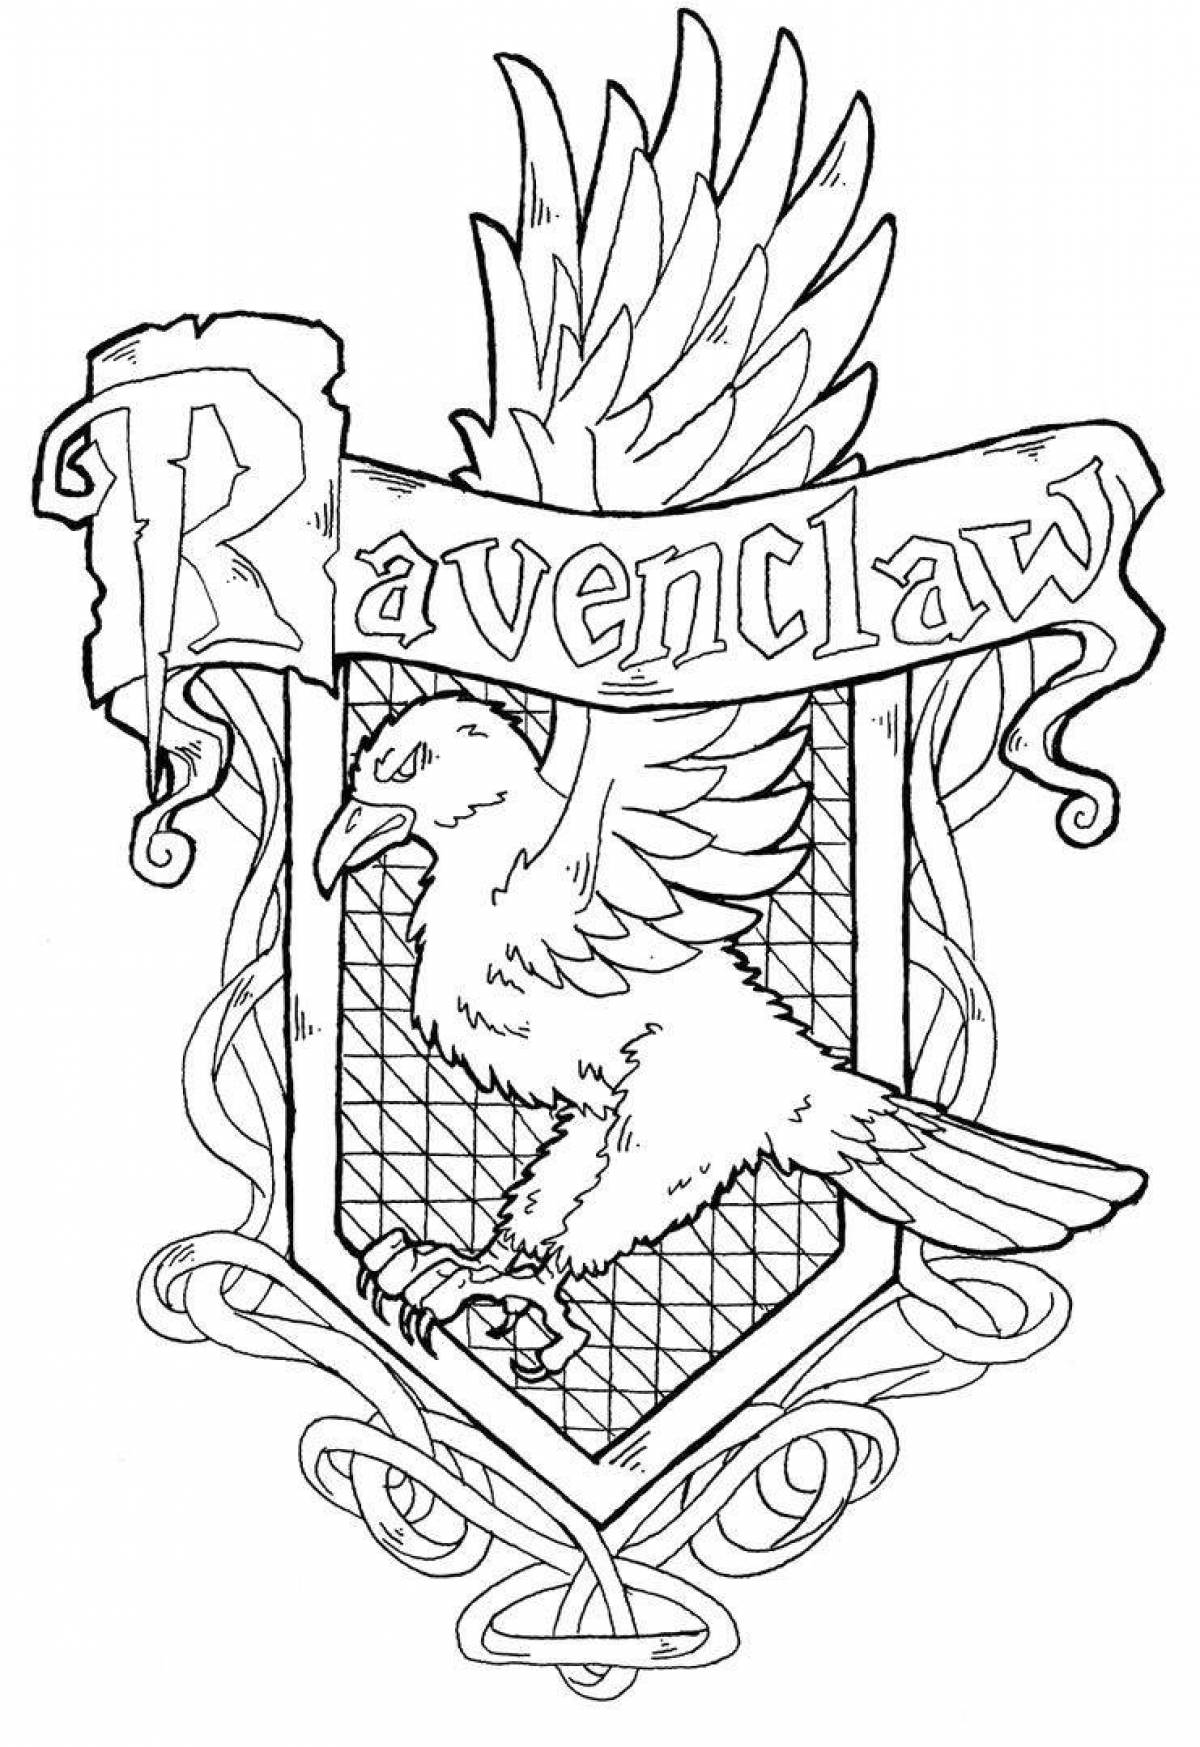 Hogwarts coat of arms #2